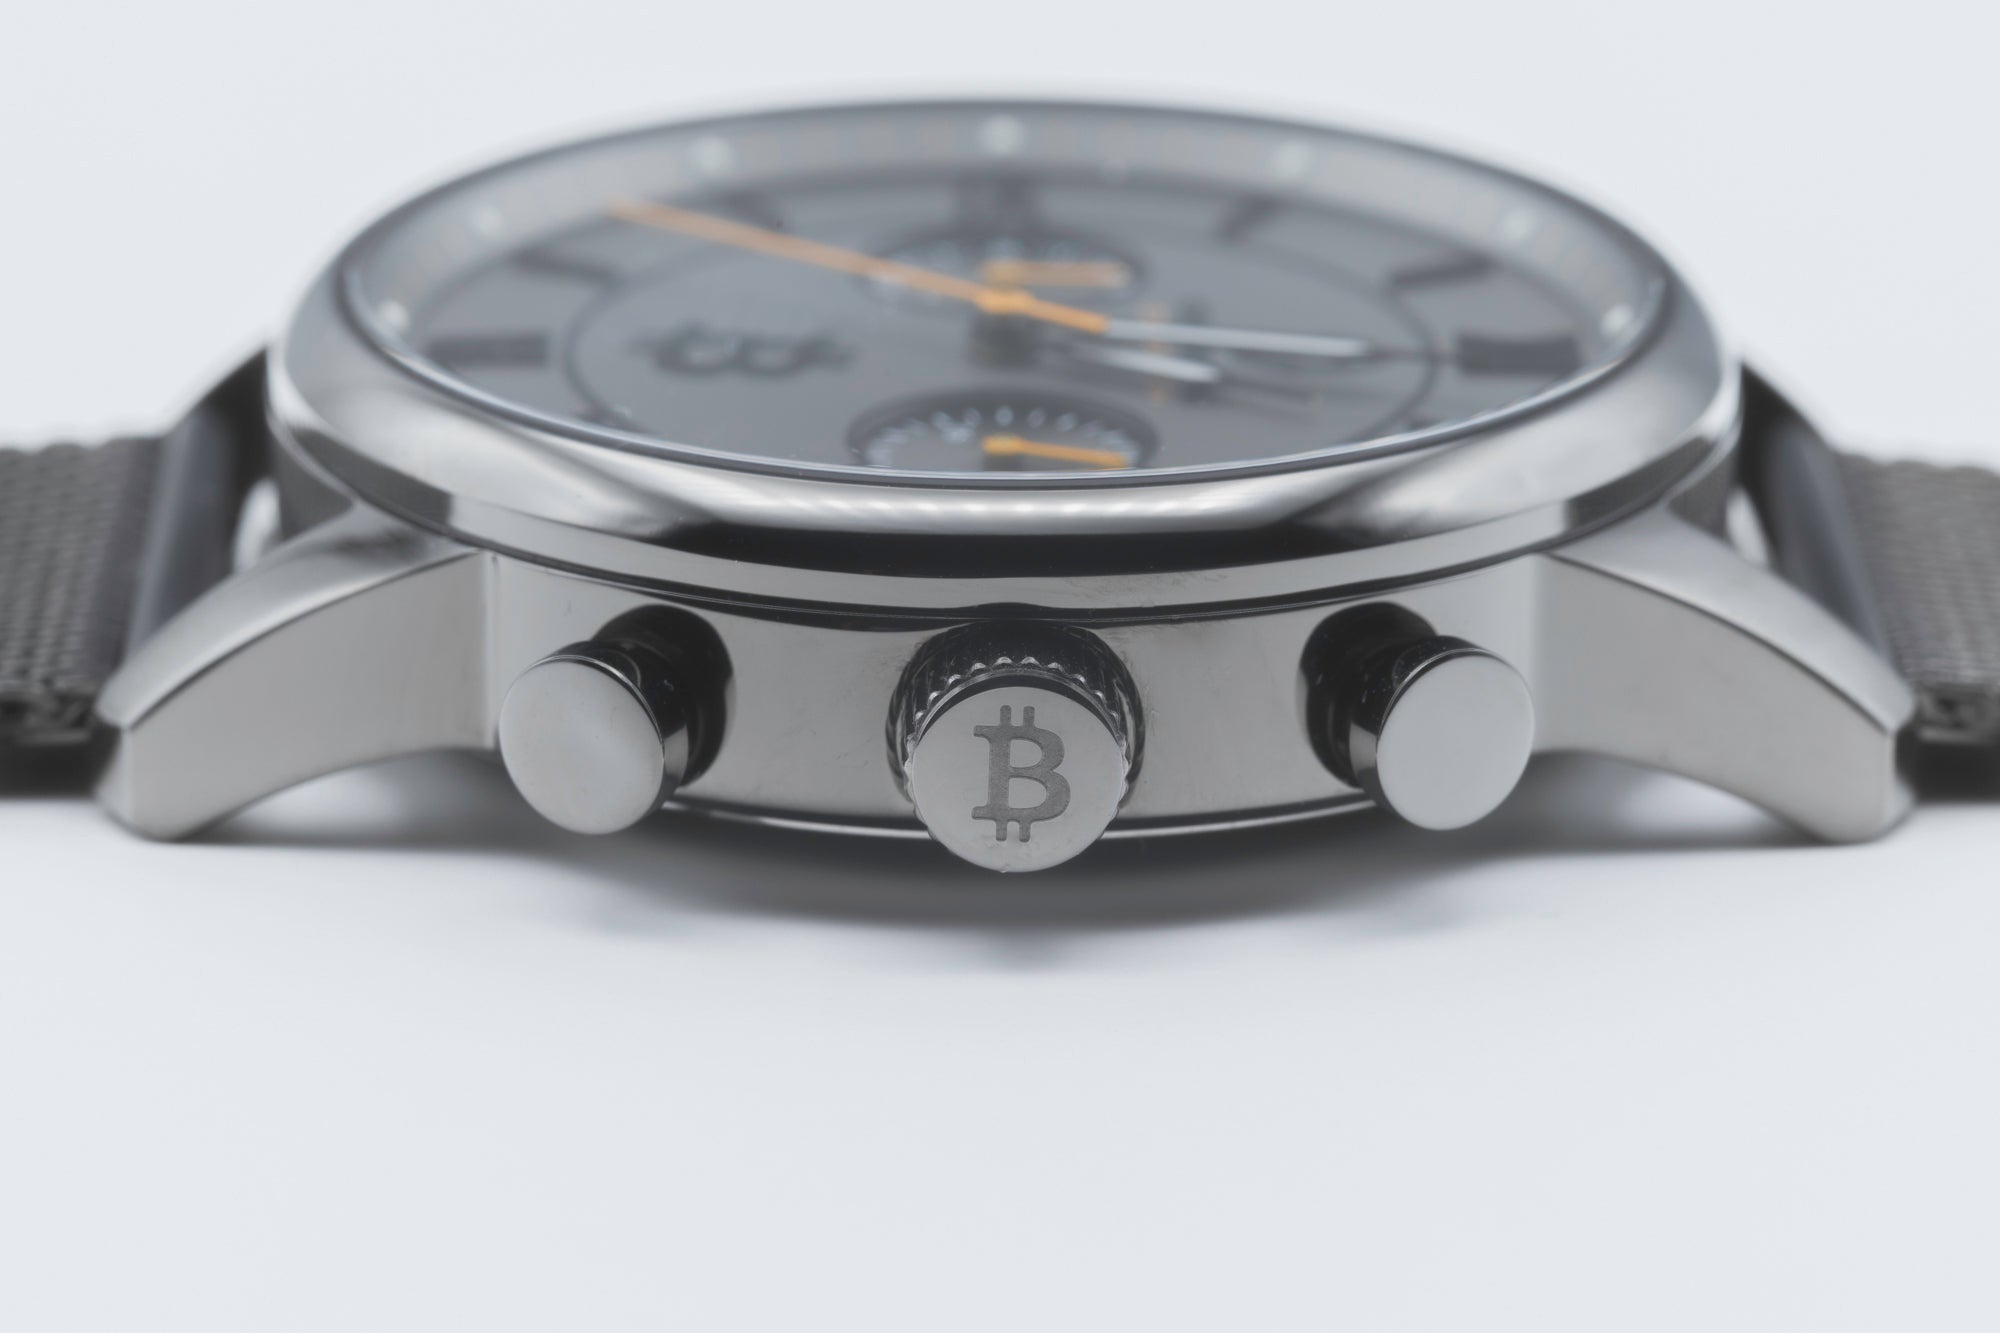 Excellent craftsmanship of the Shadow Edition Bitcoin Watch by Coin Vigilante